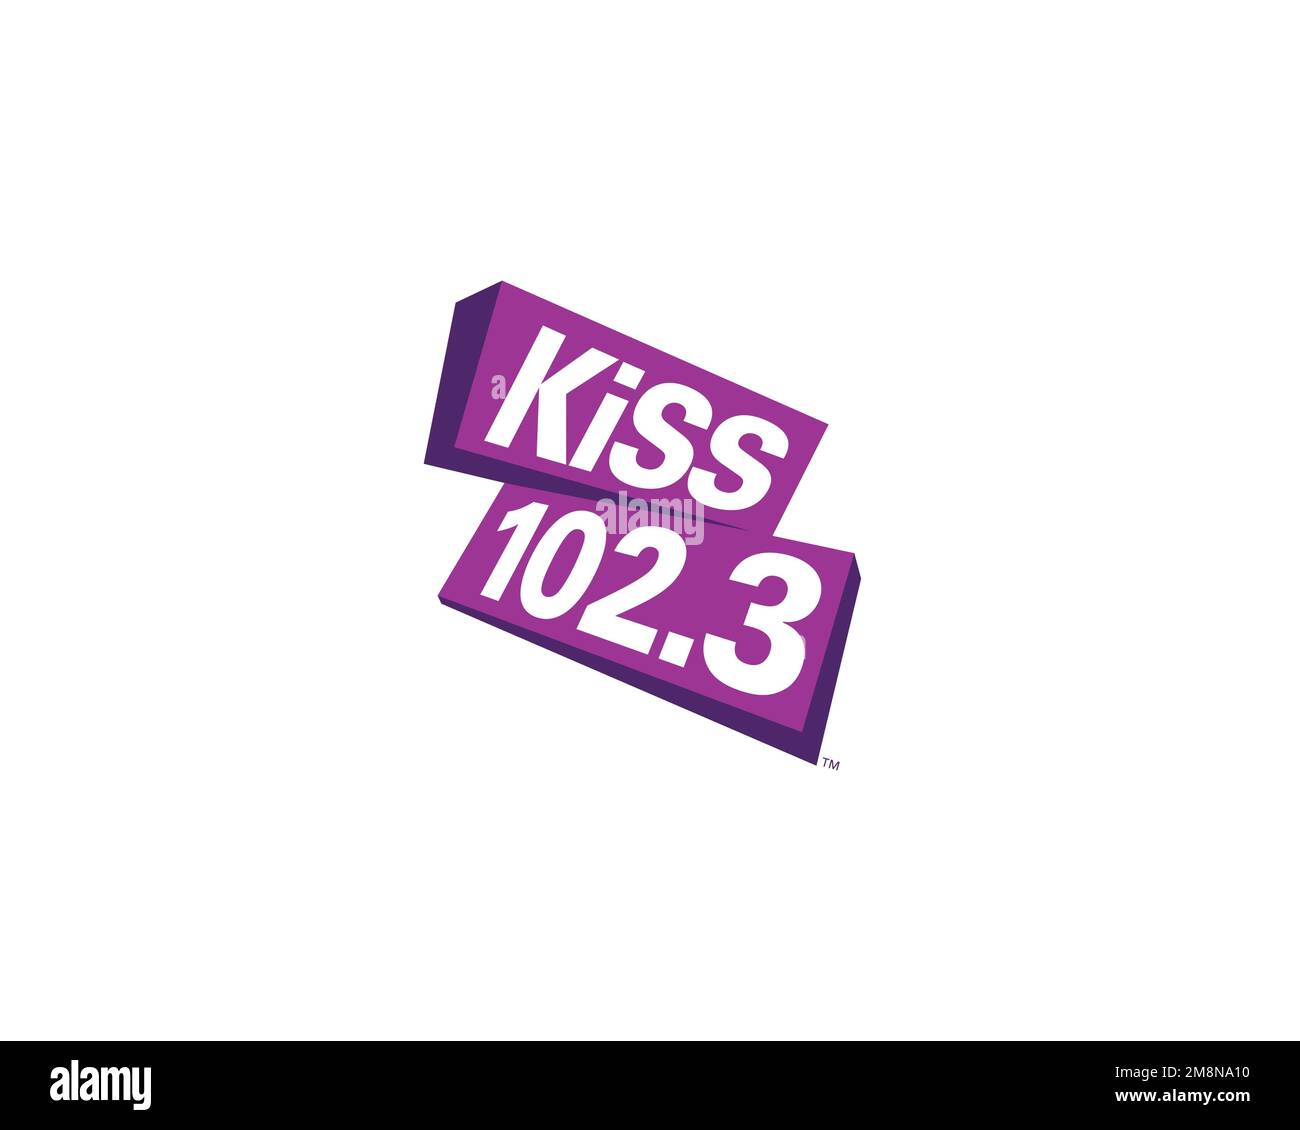 CKY FM, rotated logo, white background B Stock Photo